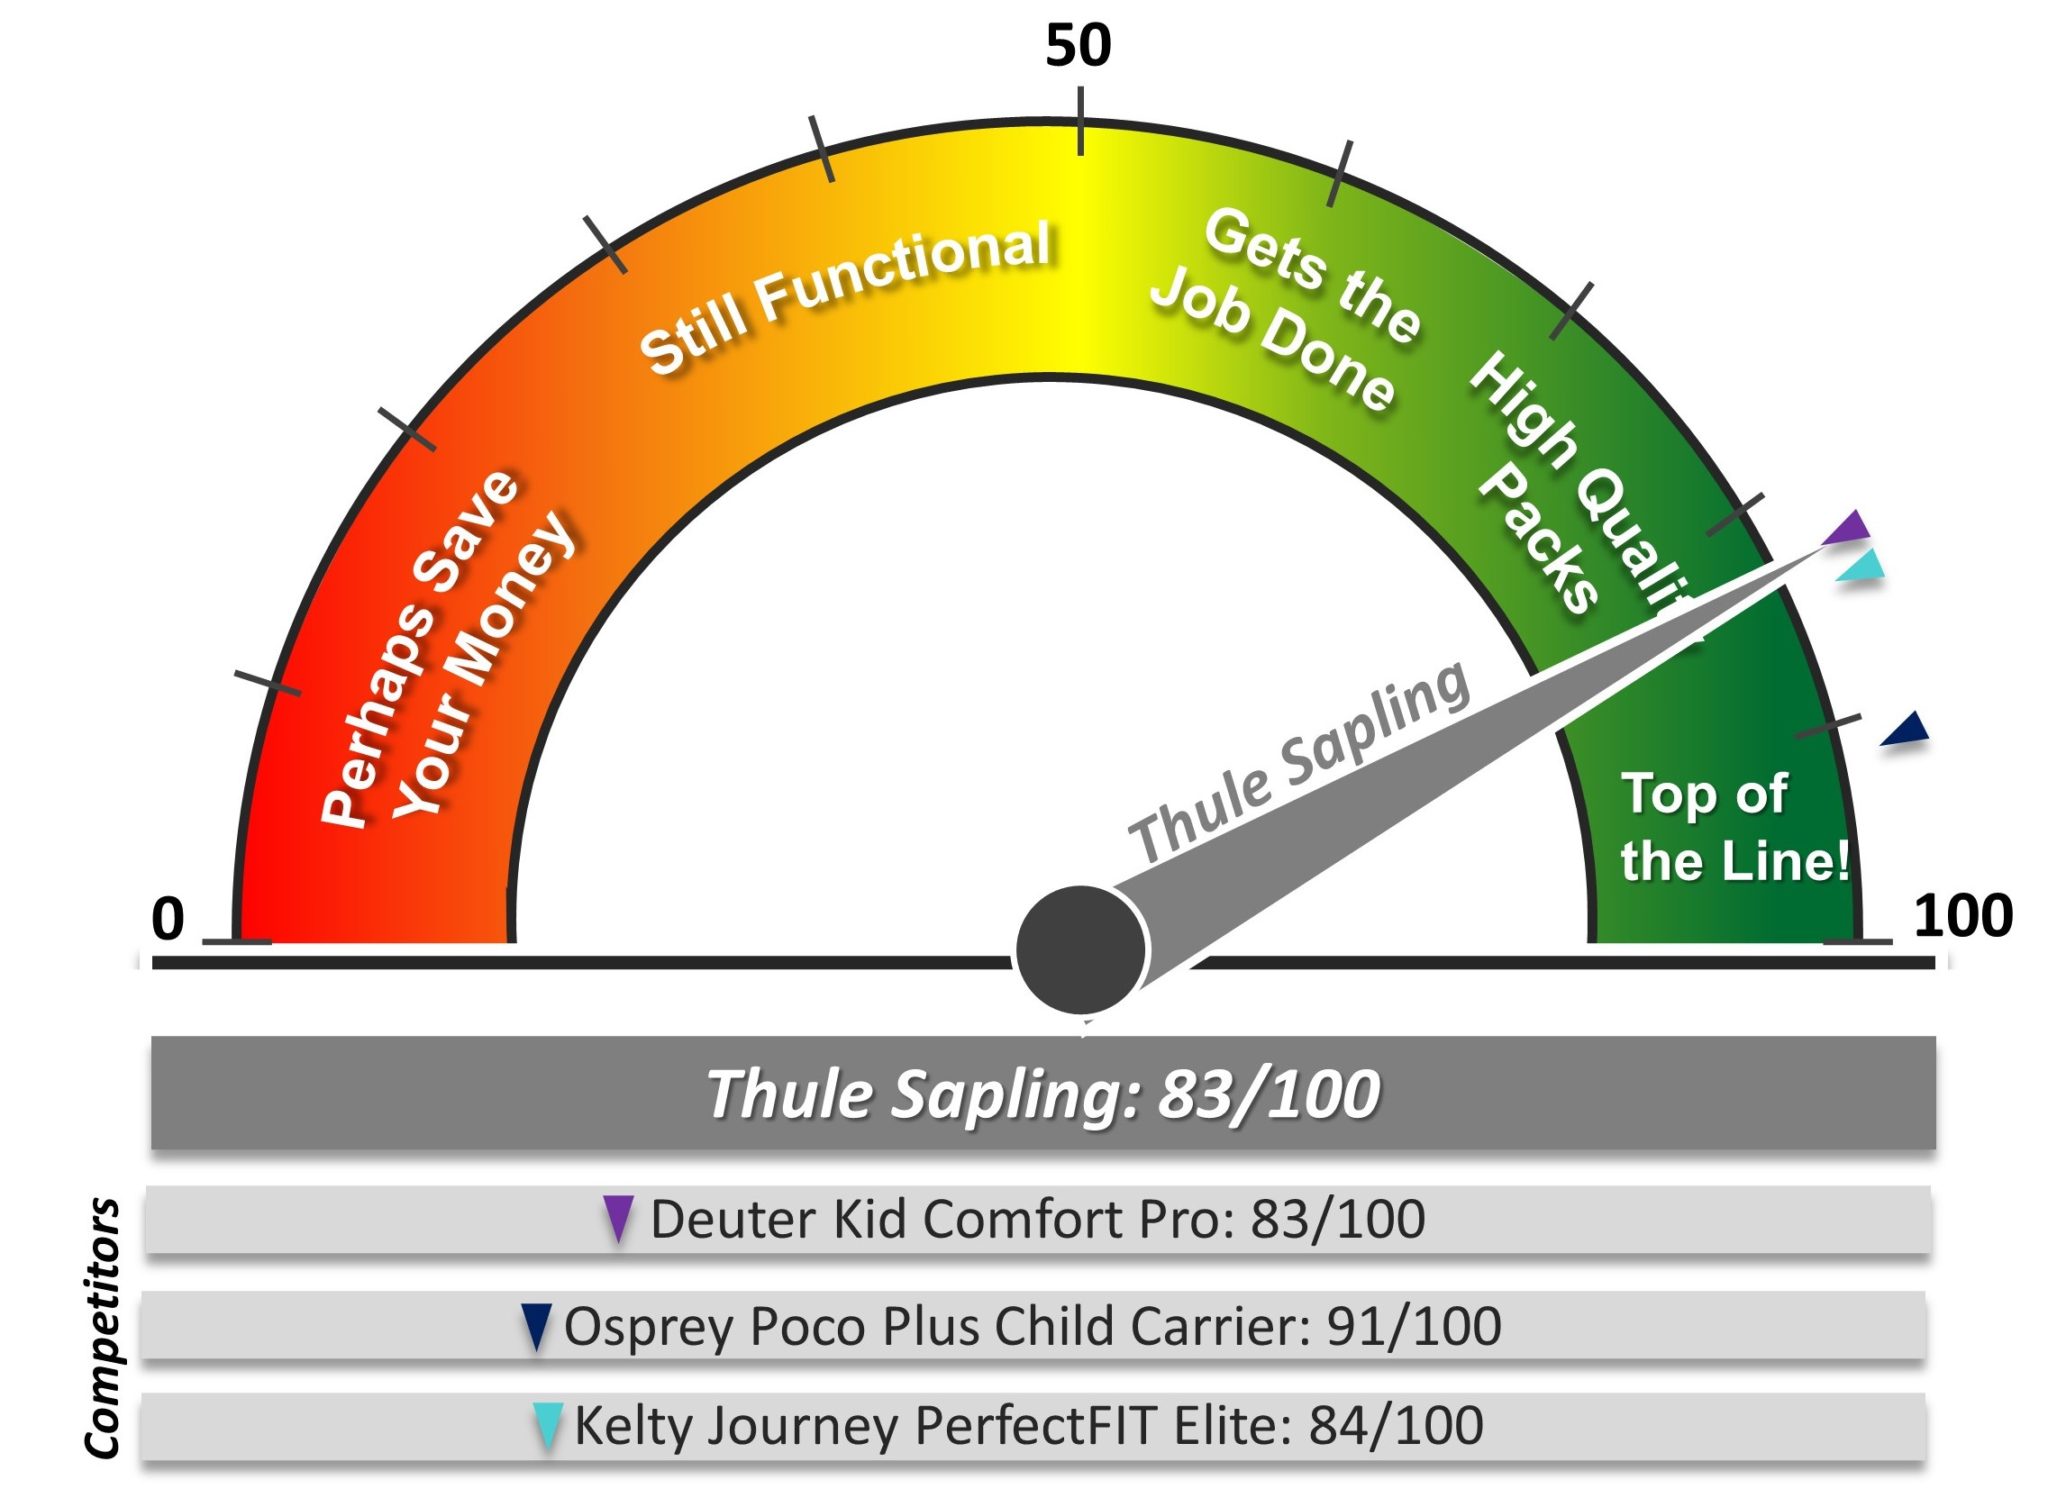 Thule Sapling Scoring Dial vs Competitors